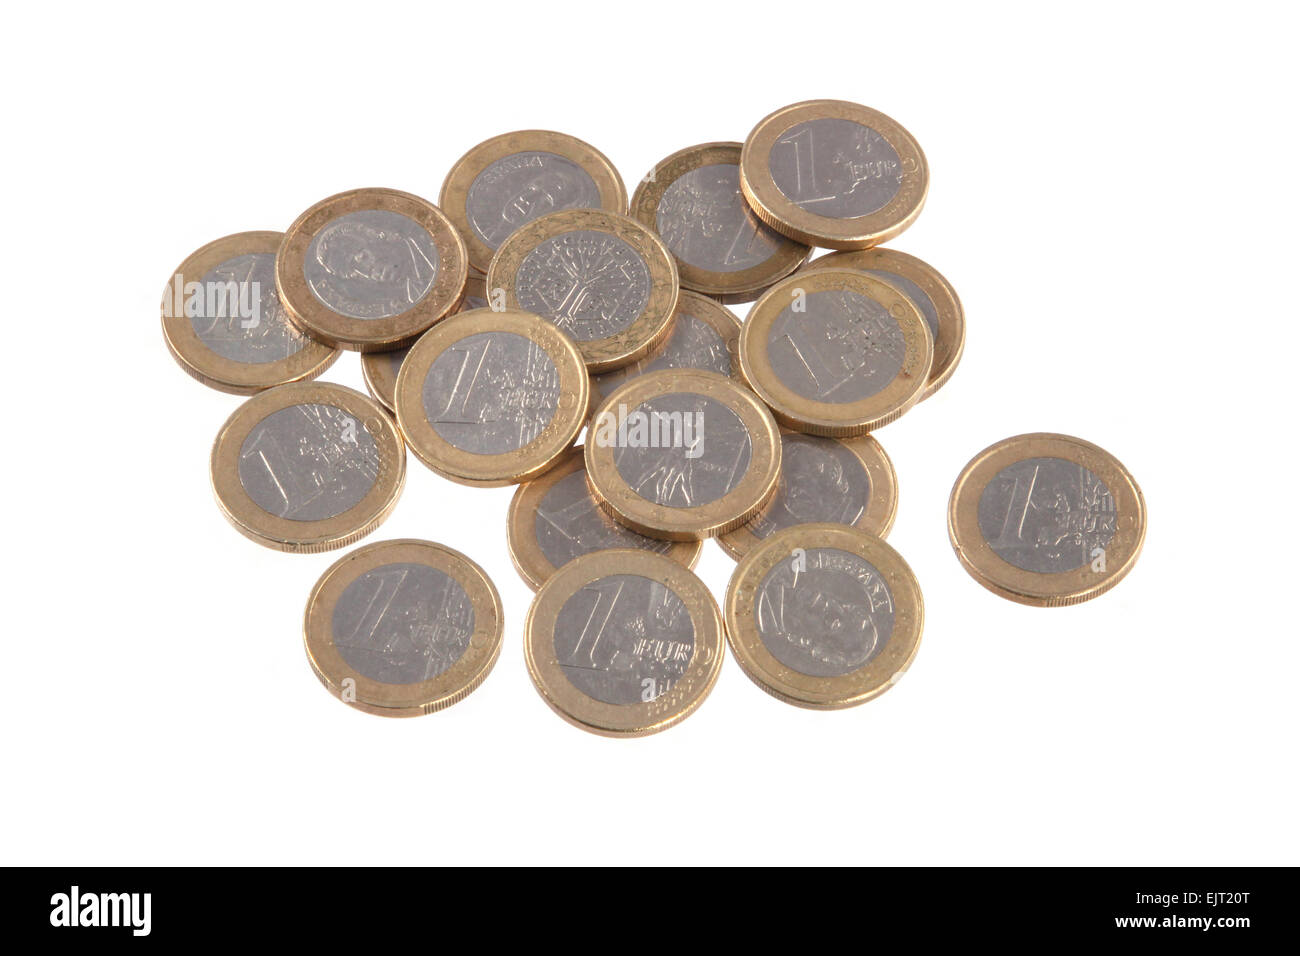 Close up photo Euro coins on a plain white background. Stock Photo